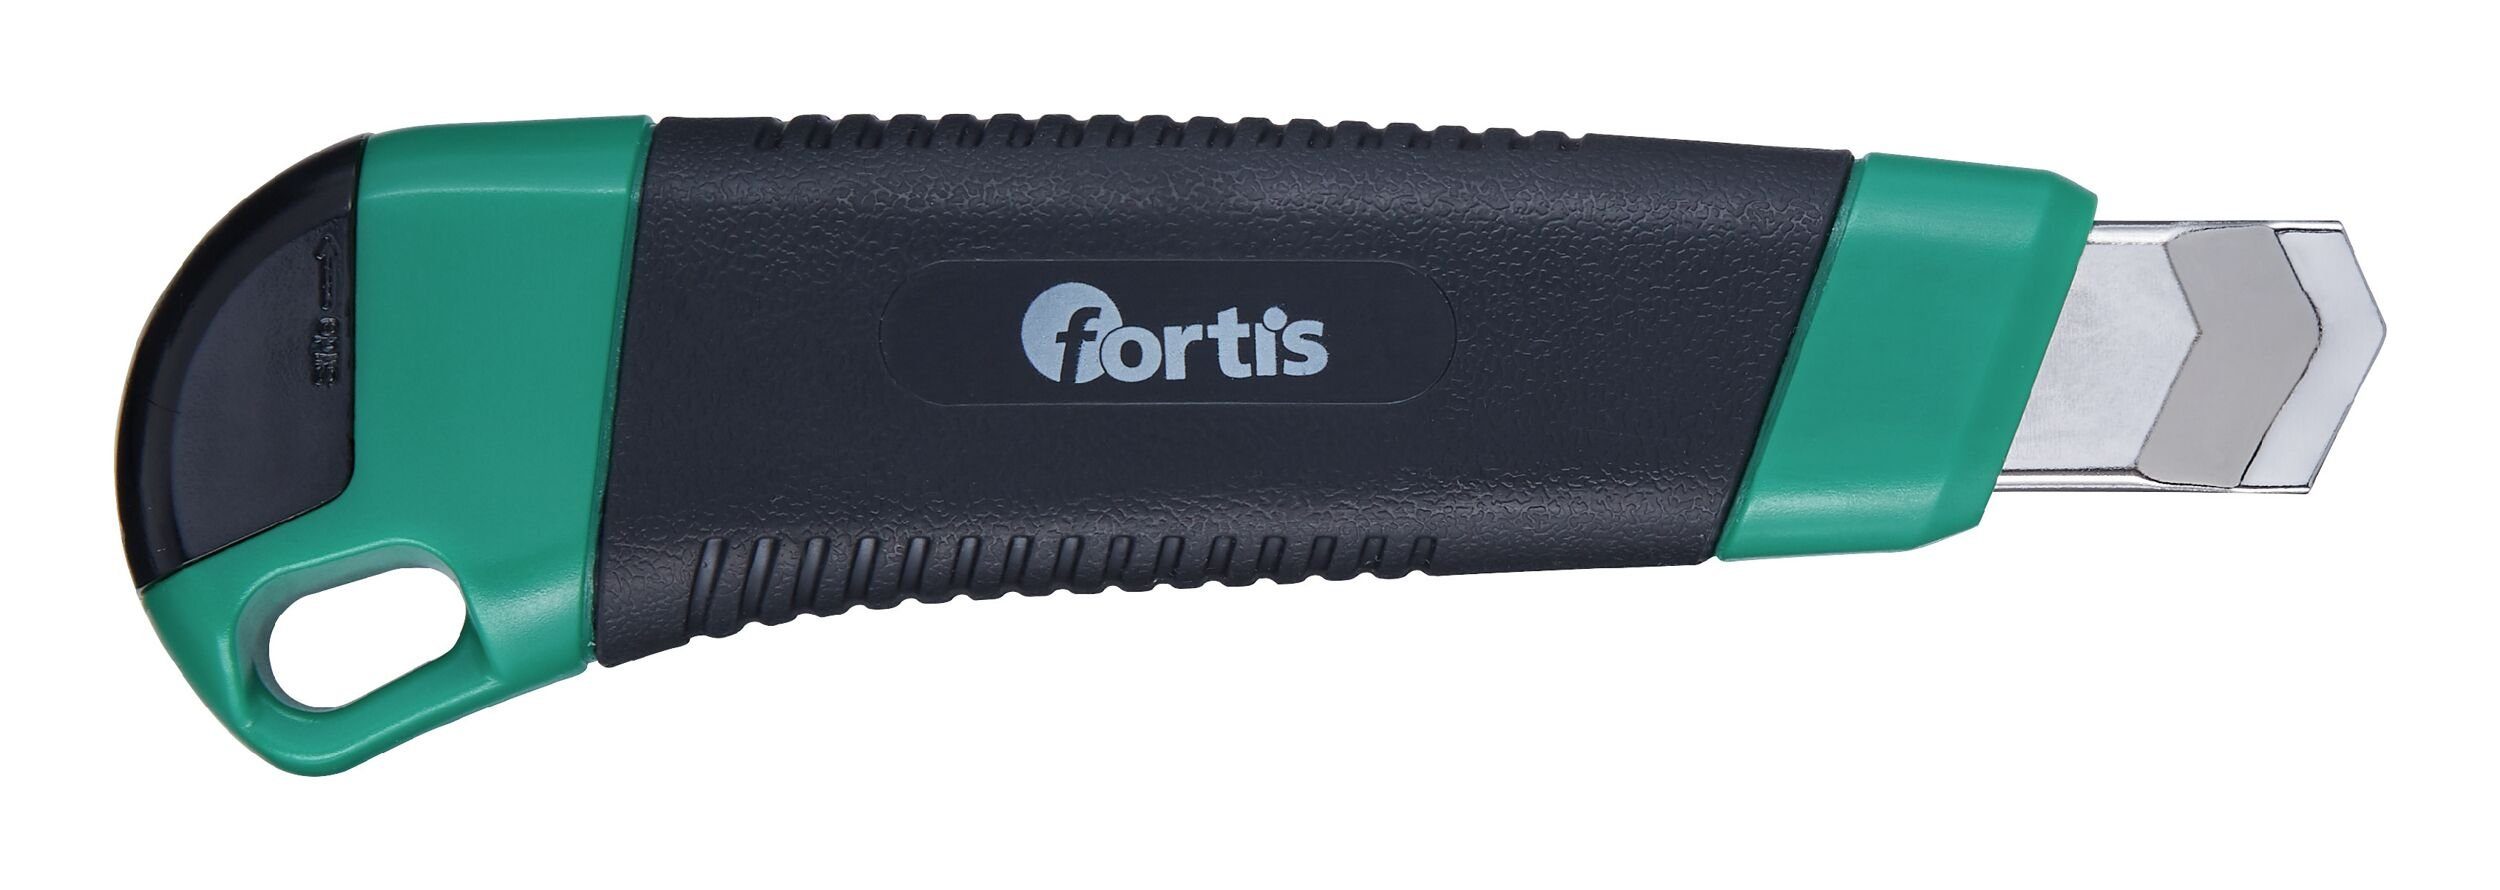 fortis Cutter, Cuttermesser Kunststoff 18 3 Klingen mit mm